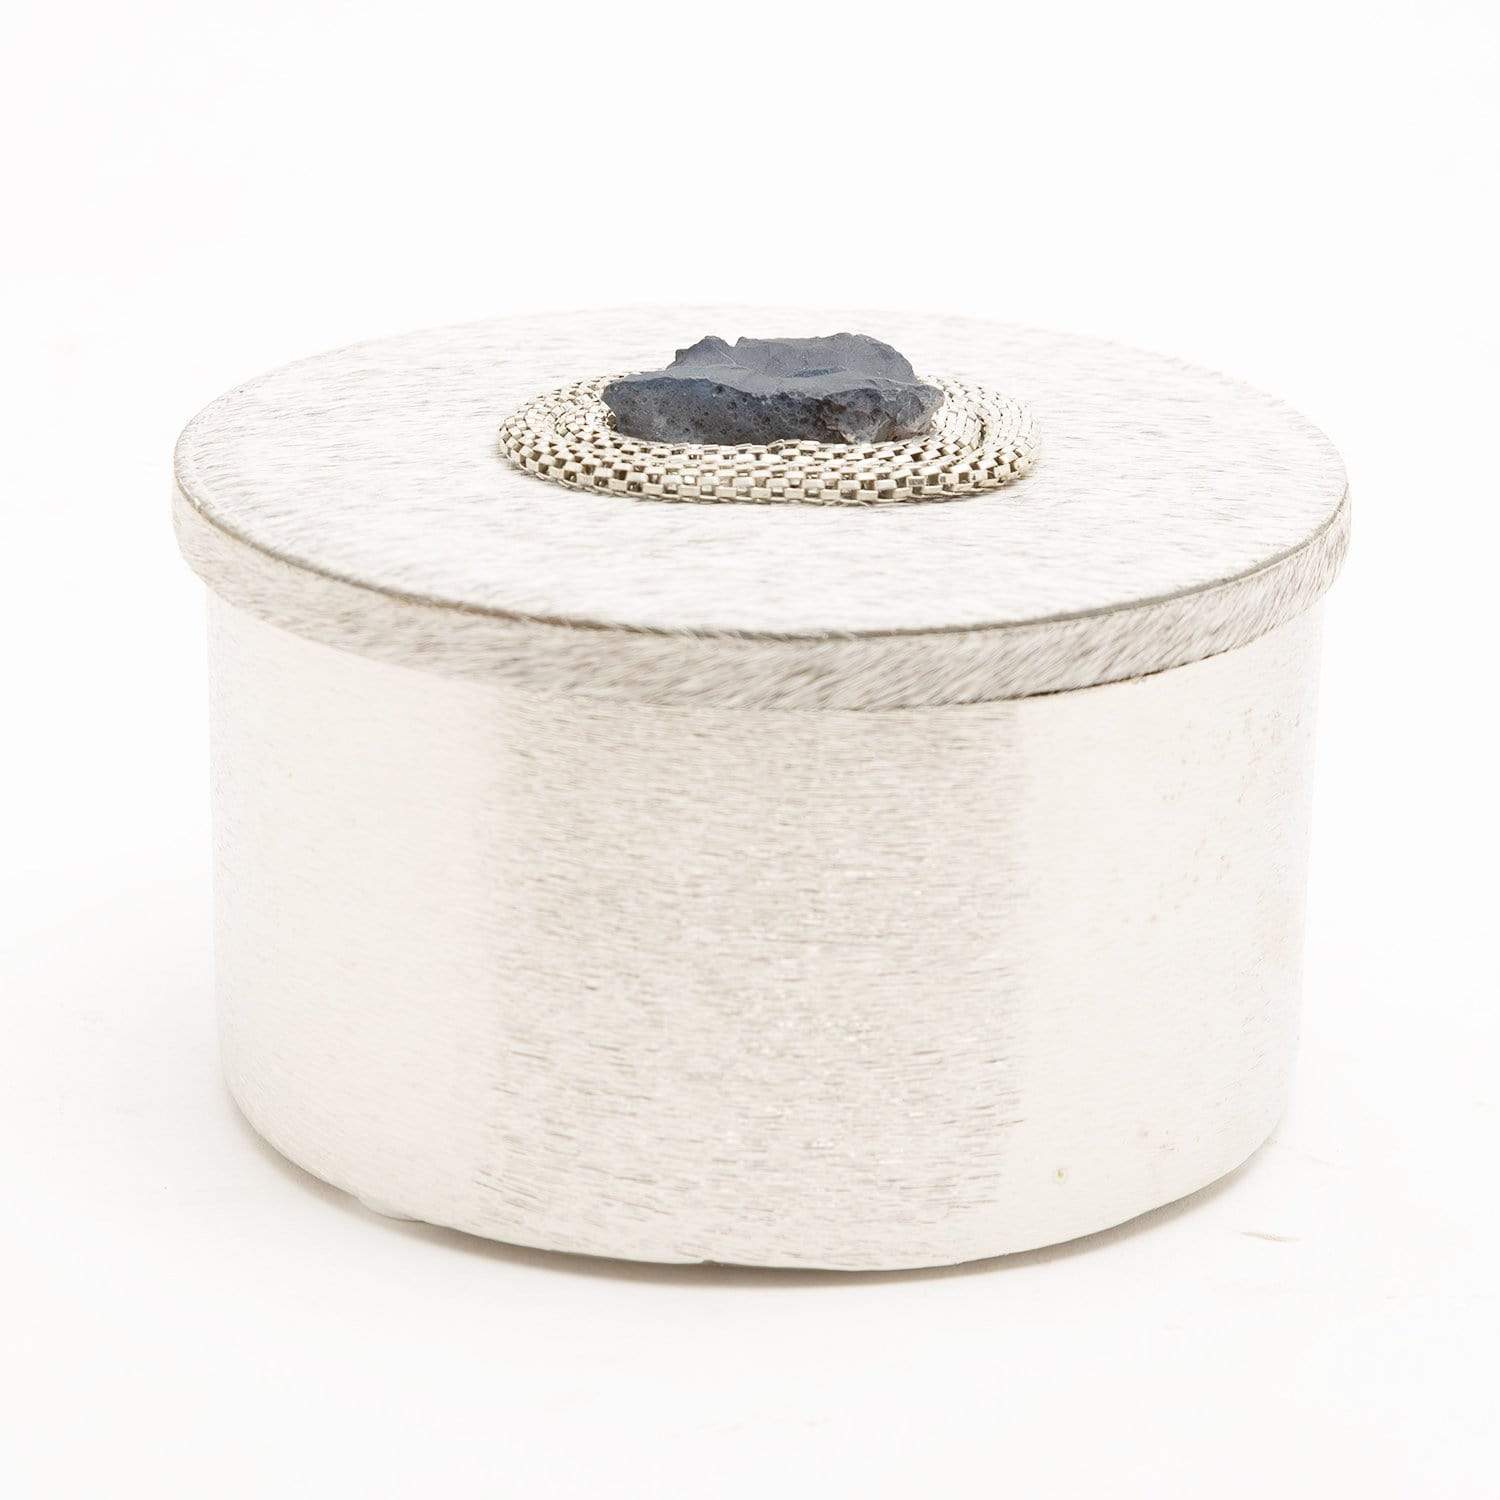 باناش ديكو صندوق معدني مصقول مع جلد هيرون 6.5 بوصة - 90126